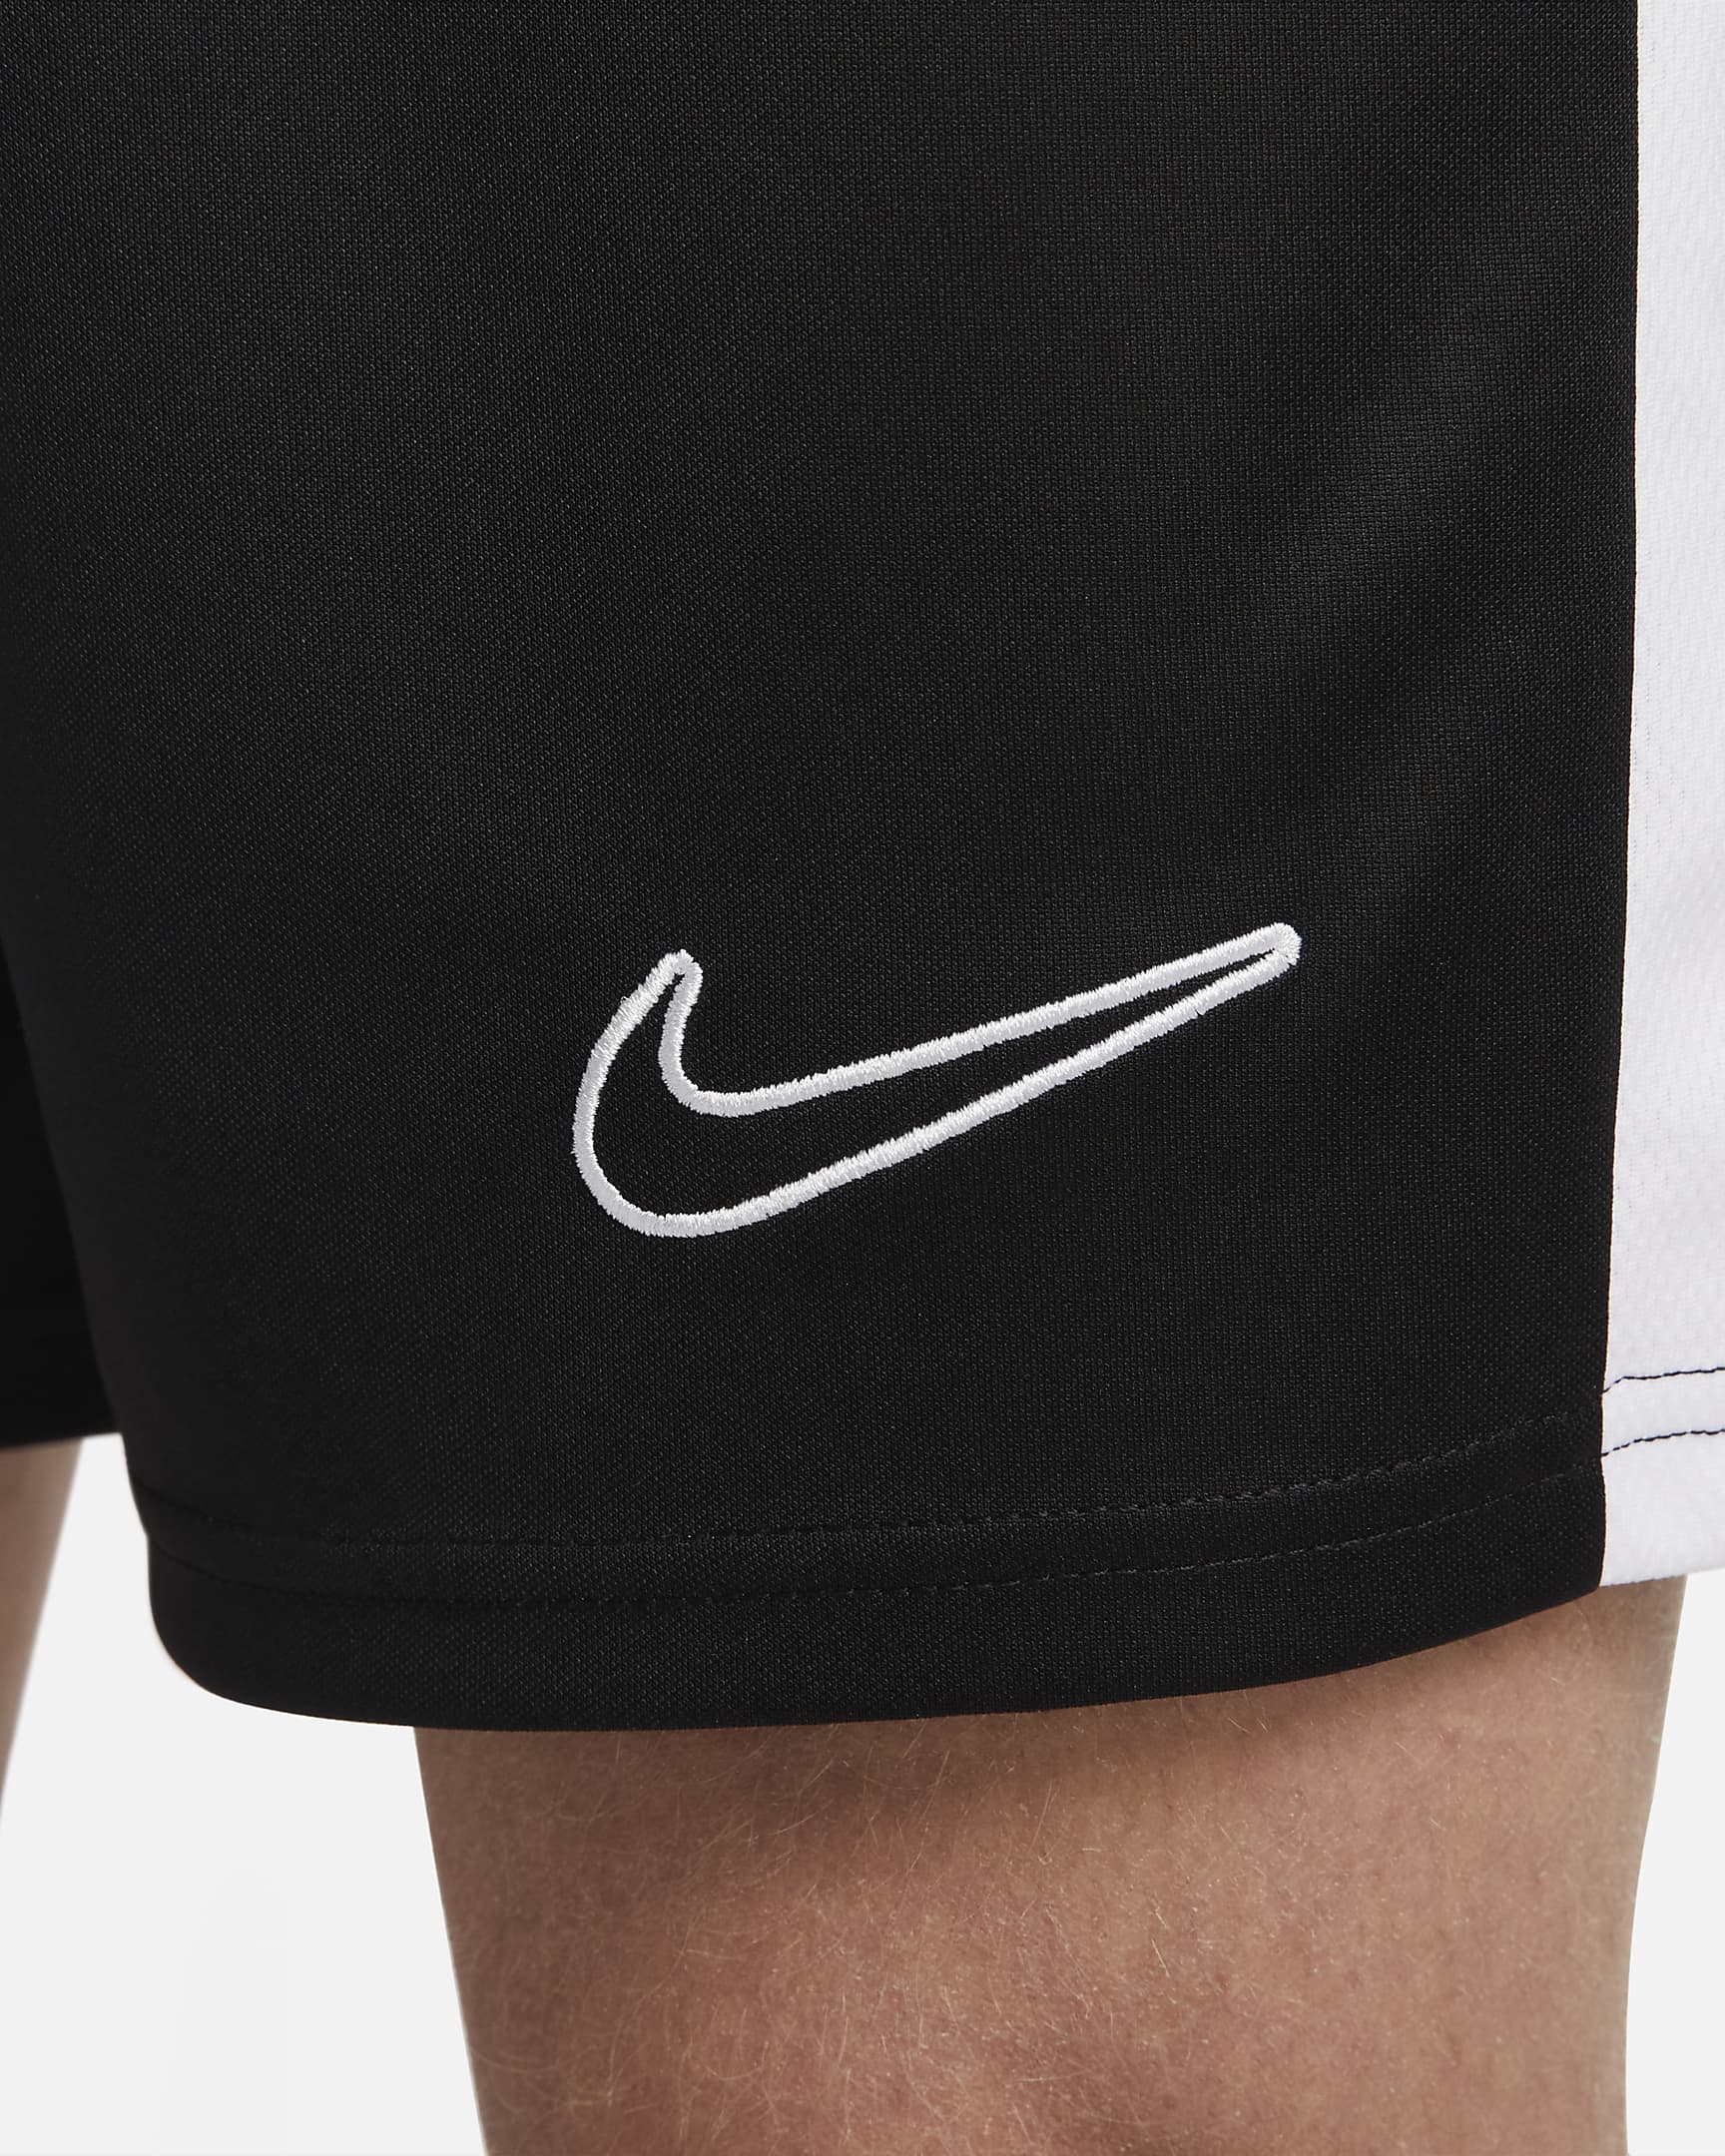 Nike Dri-FIT Academy Dri-FIT voetbalshorts voor heren - Zwart/Wit/Zwart/Wit